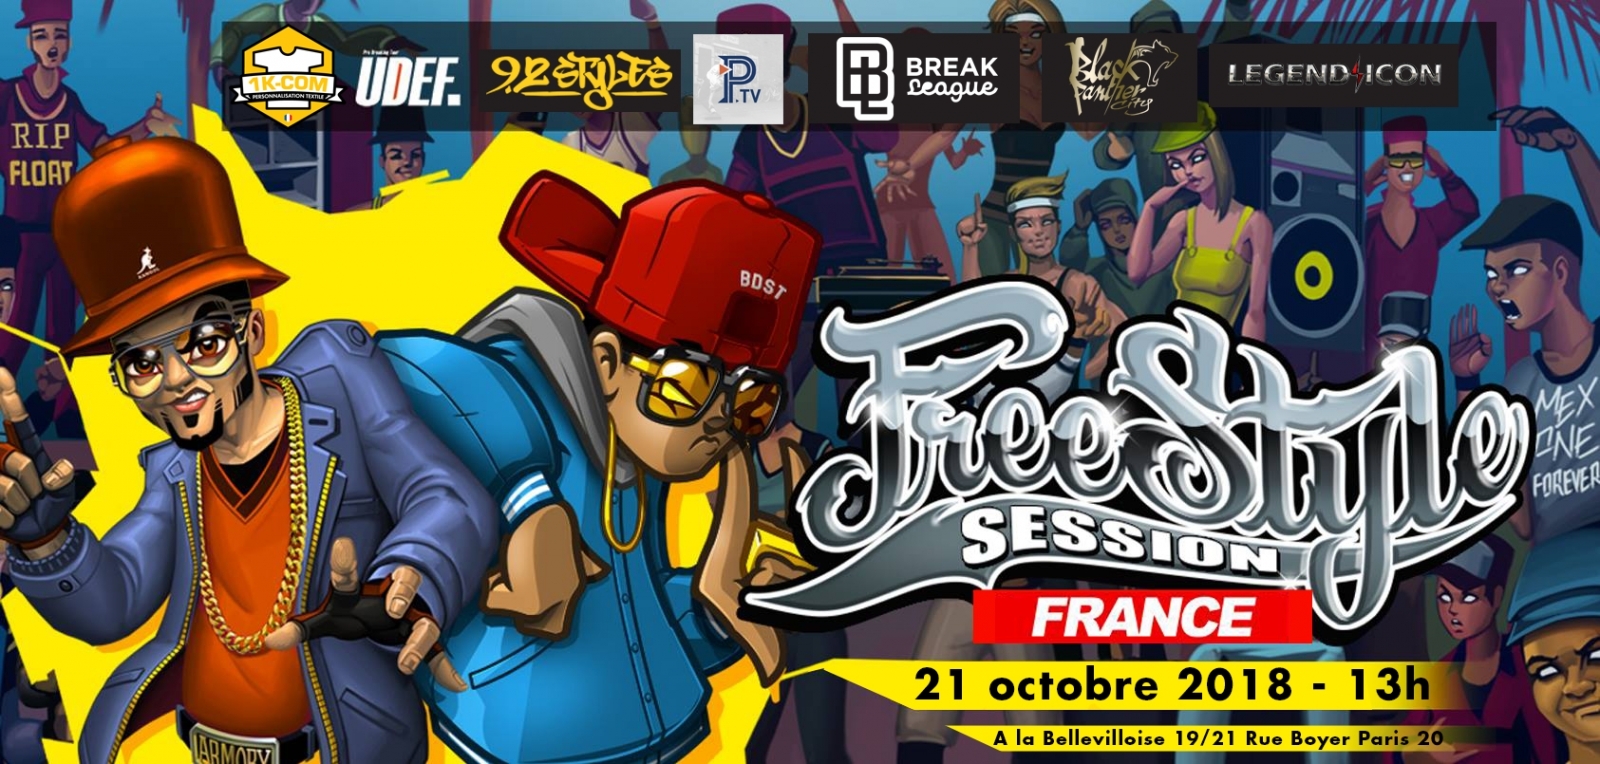 FREESTYLE SESSION FRANCE 2018 -  2vs2 - Paris poster